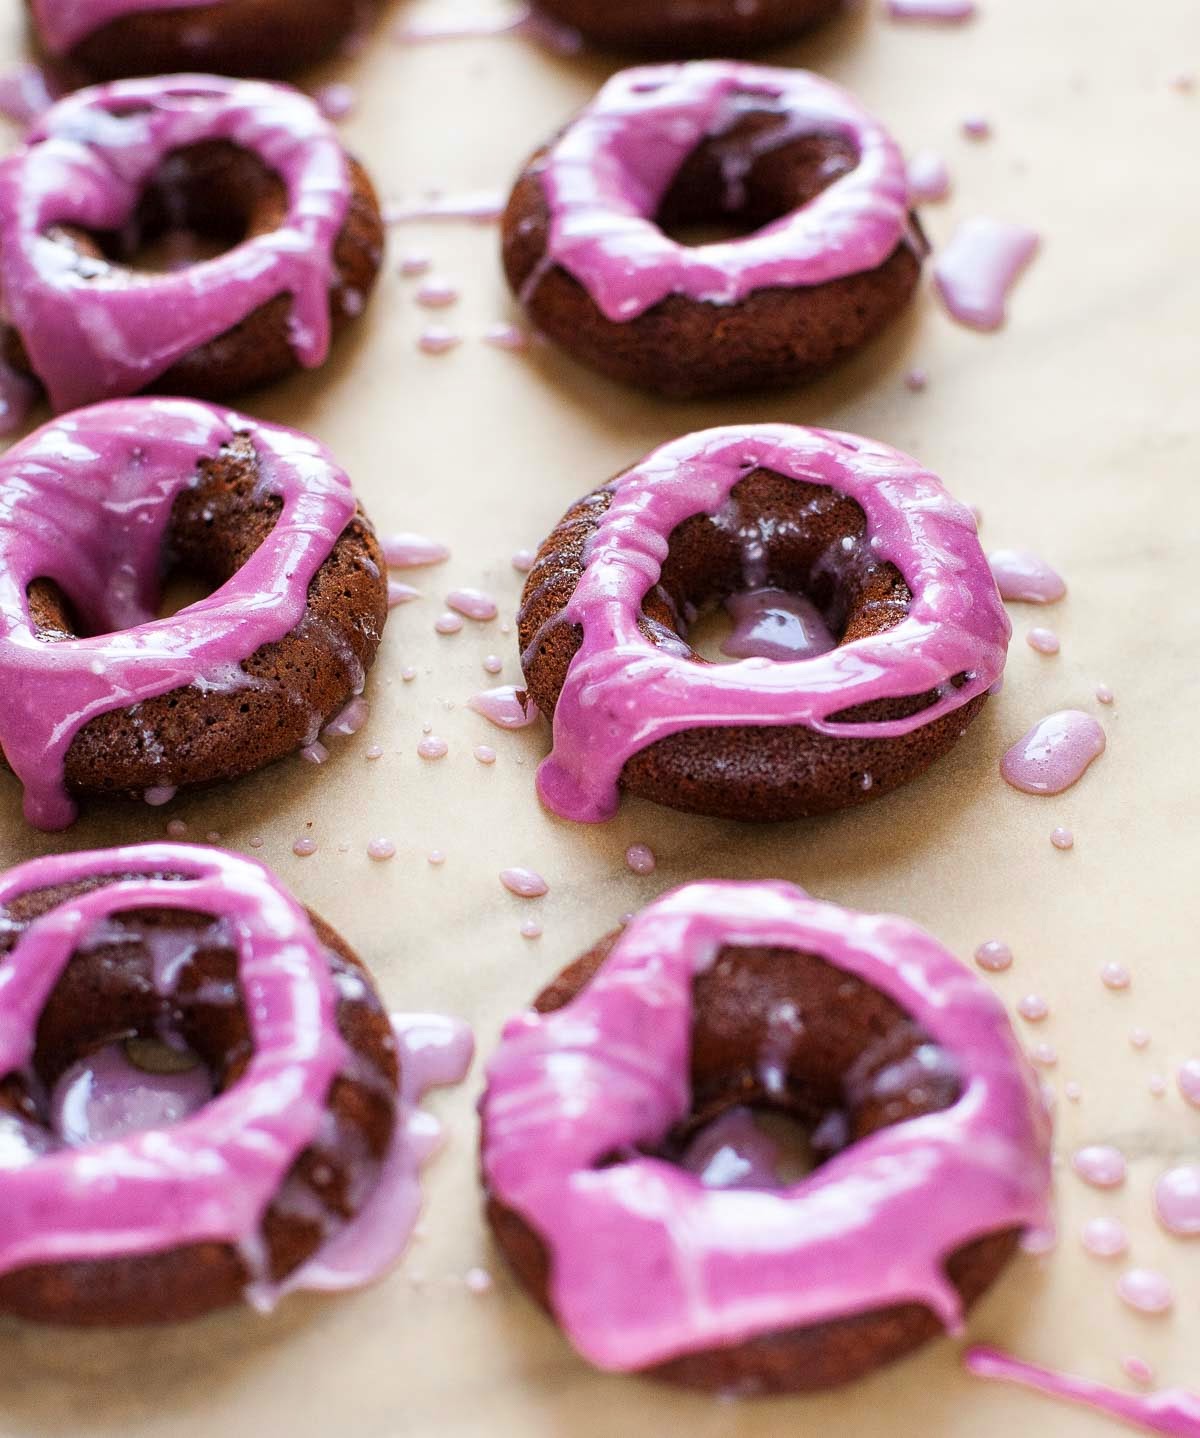 Chocolate Doughnuts with Cherry Cheesecake Glaze (Gluten free, Grain free)